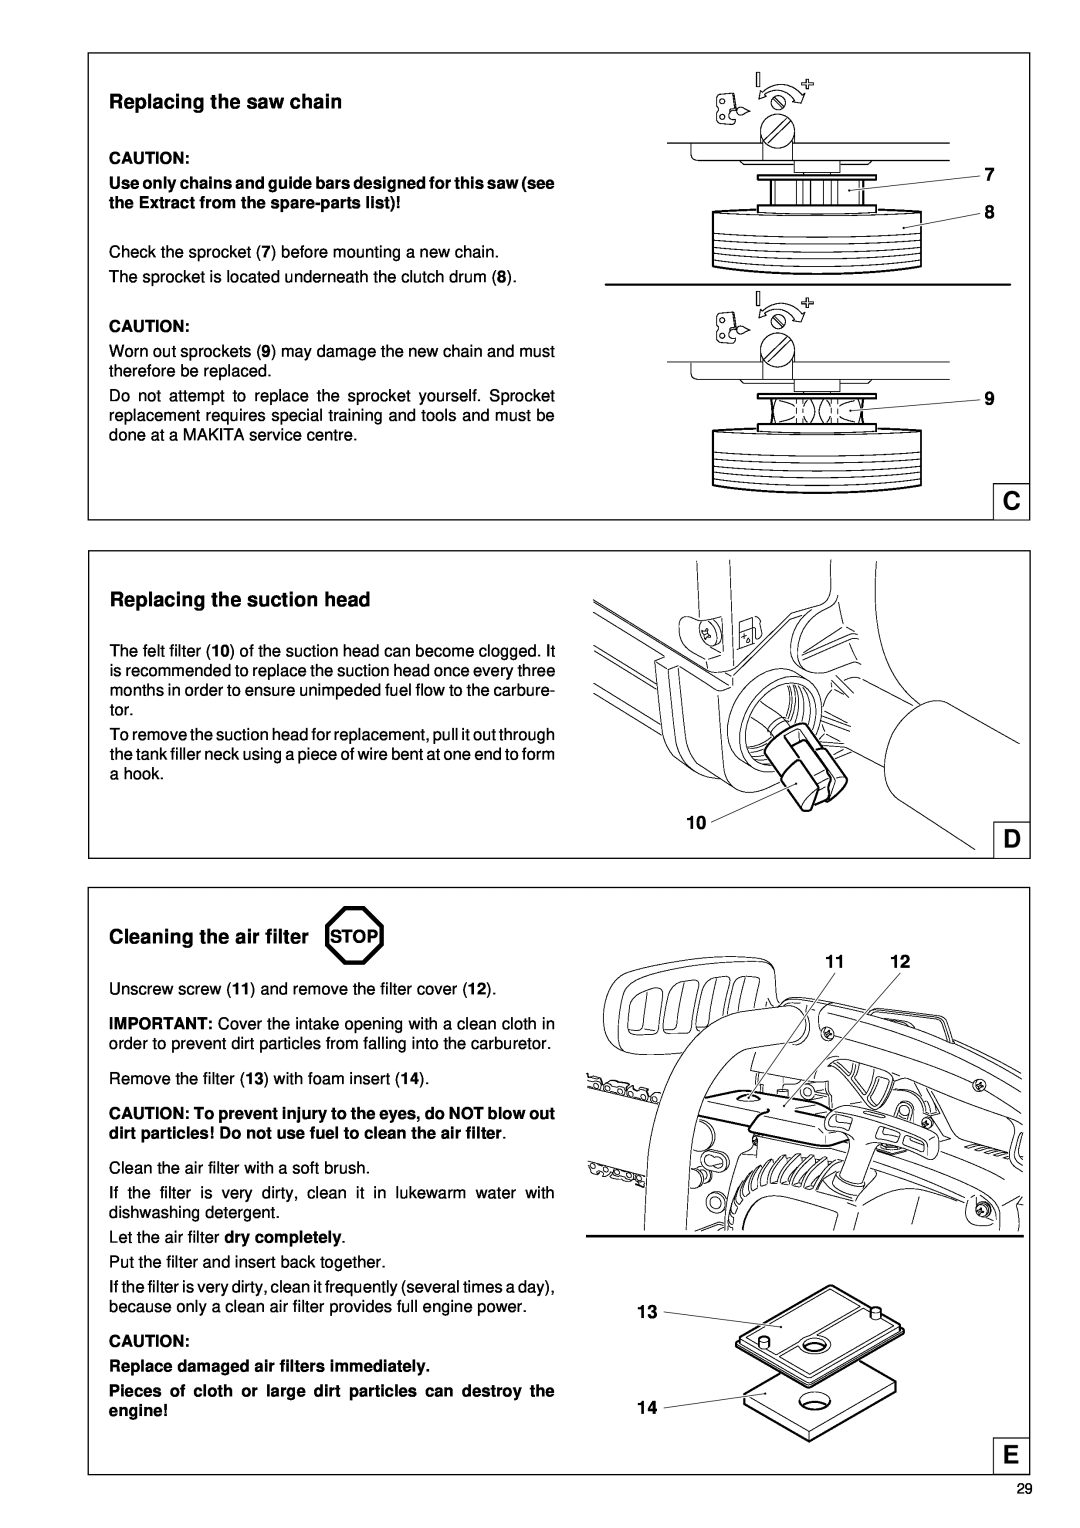 Makita DCS 330 TH instruction manual Replacing the saw chain, Replacing the suction head, Cleaning the air filter STOP 